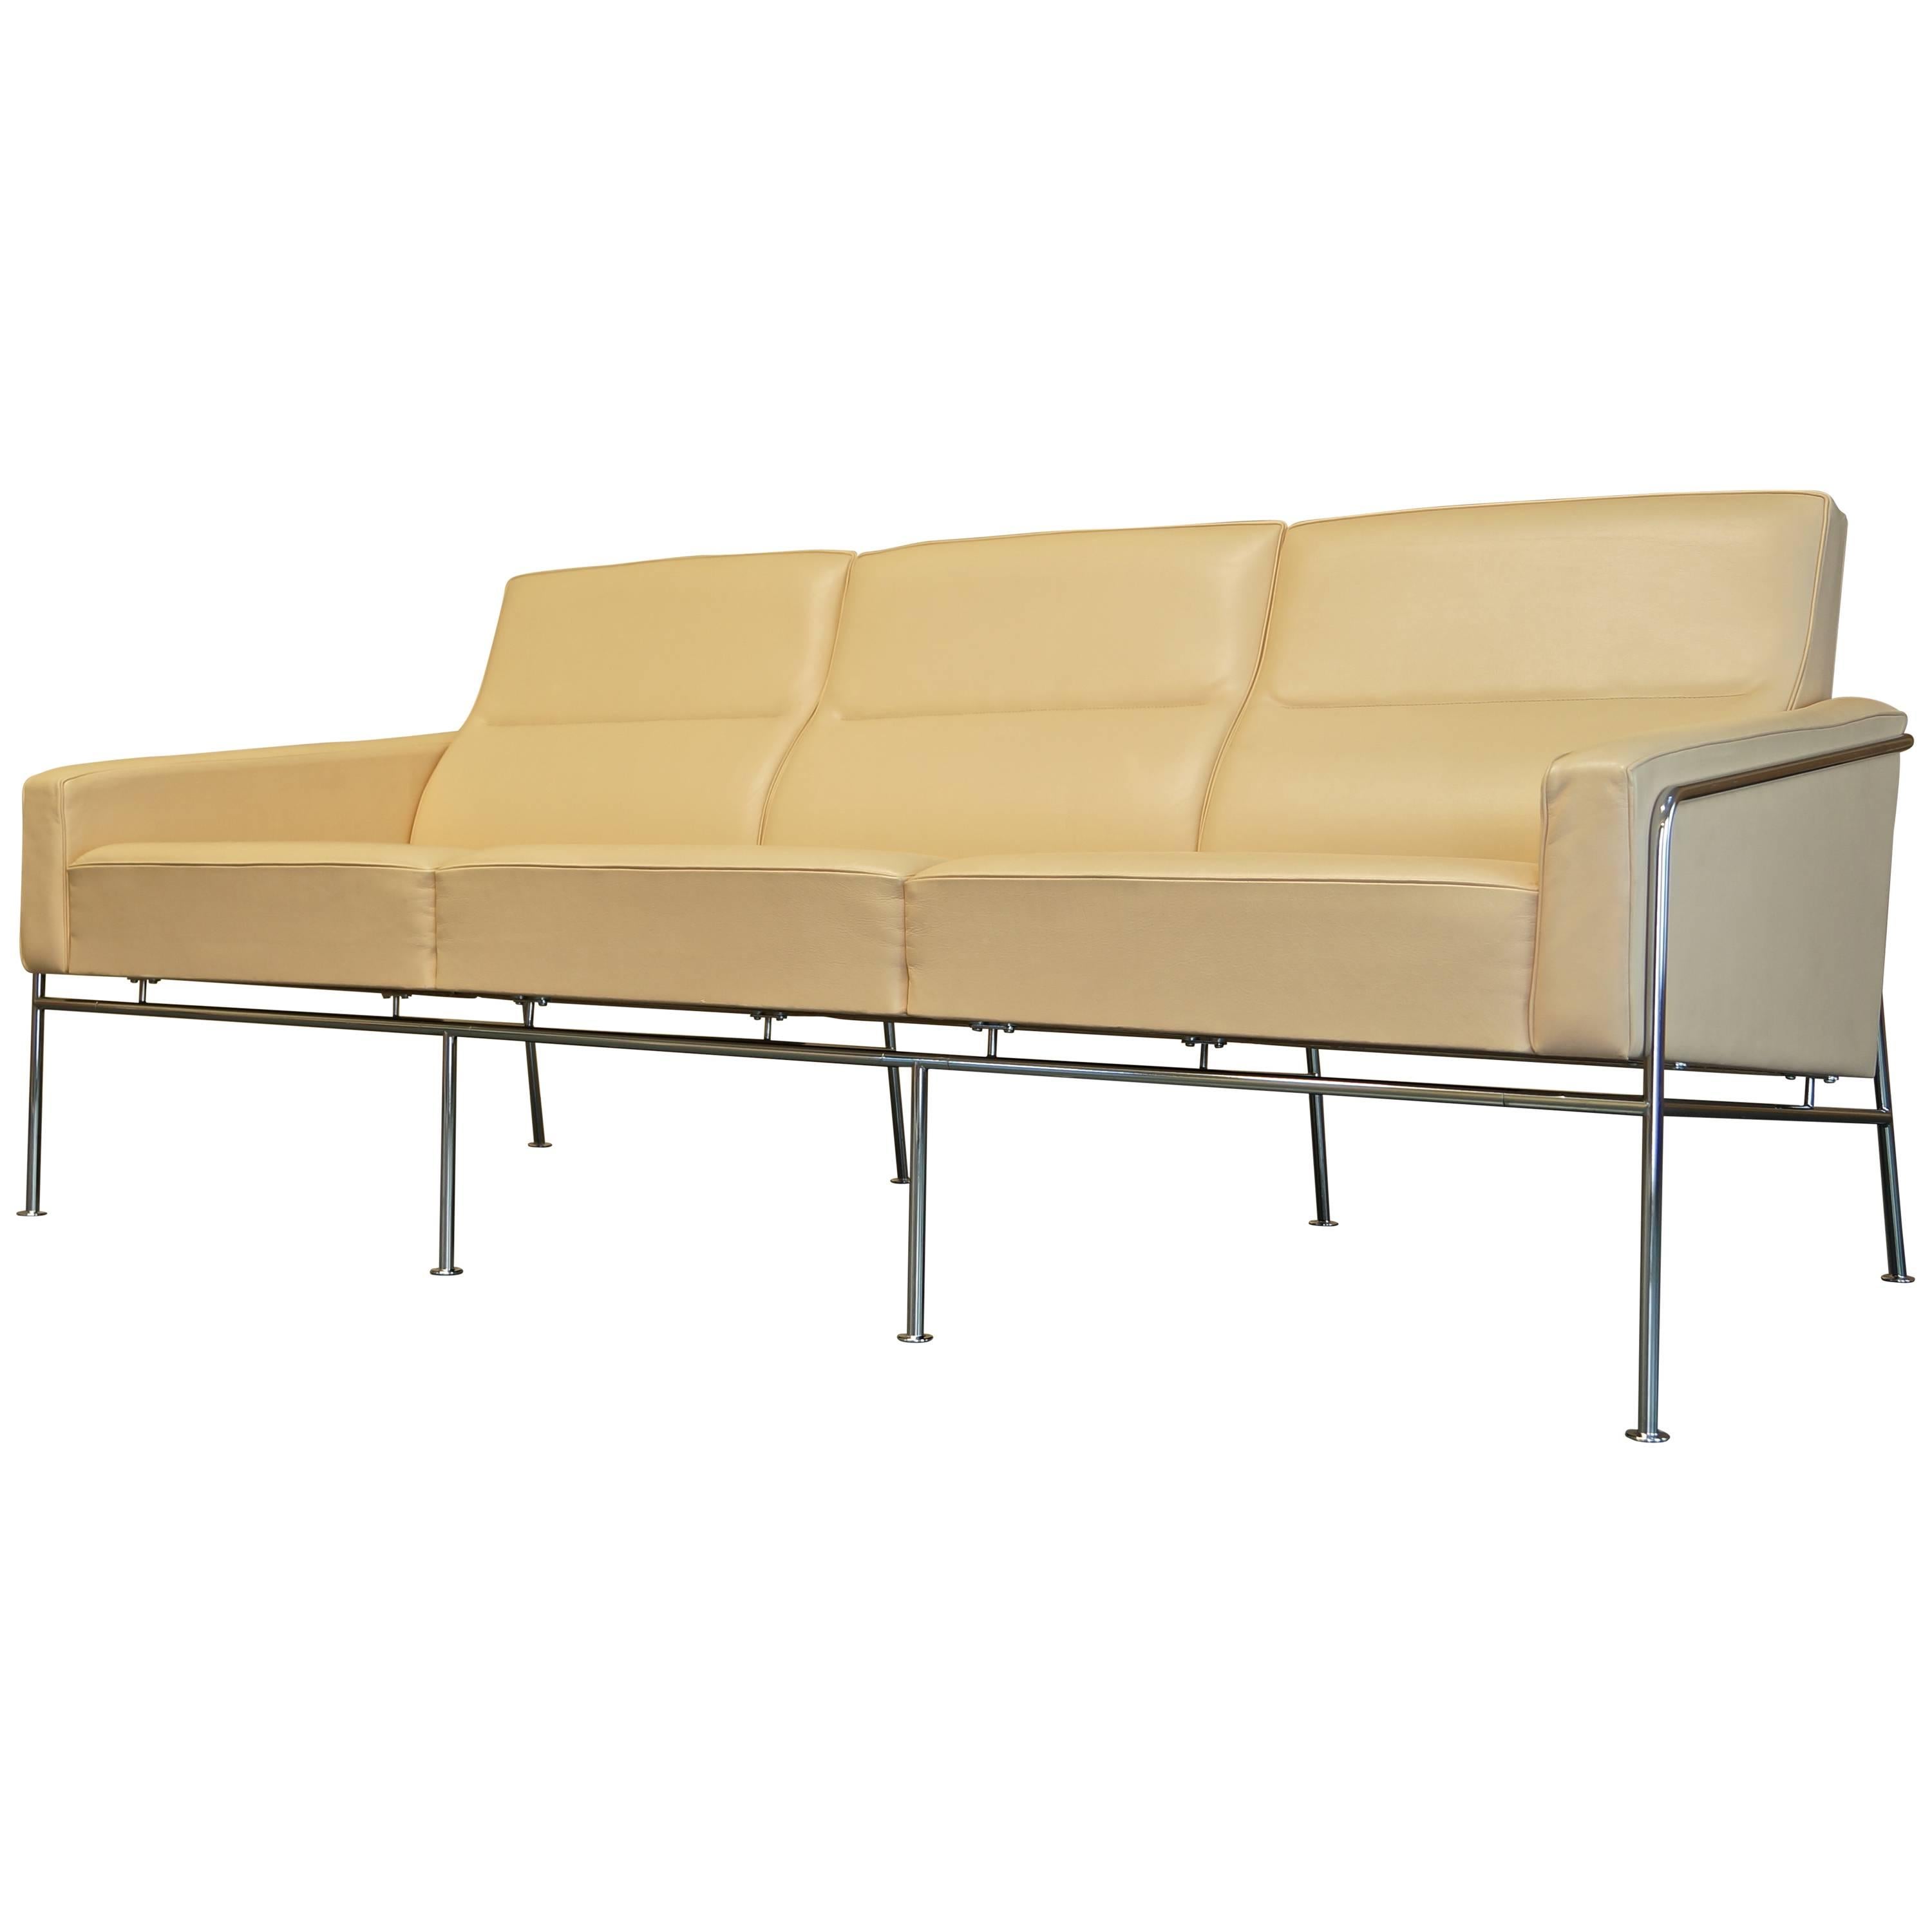 Danish Vintage Arne Jacobsen Series 3303 Leather Sofa by Fritz Hansen